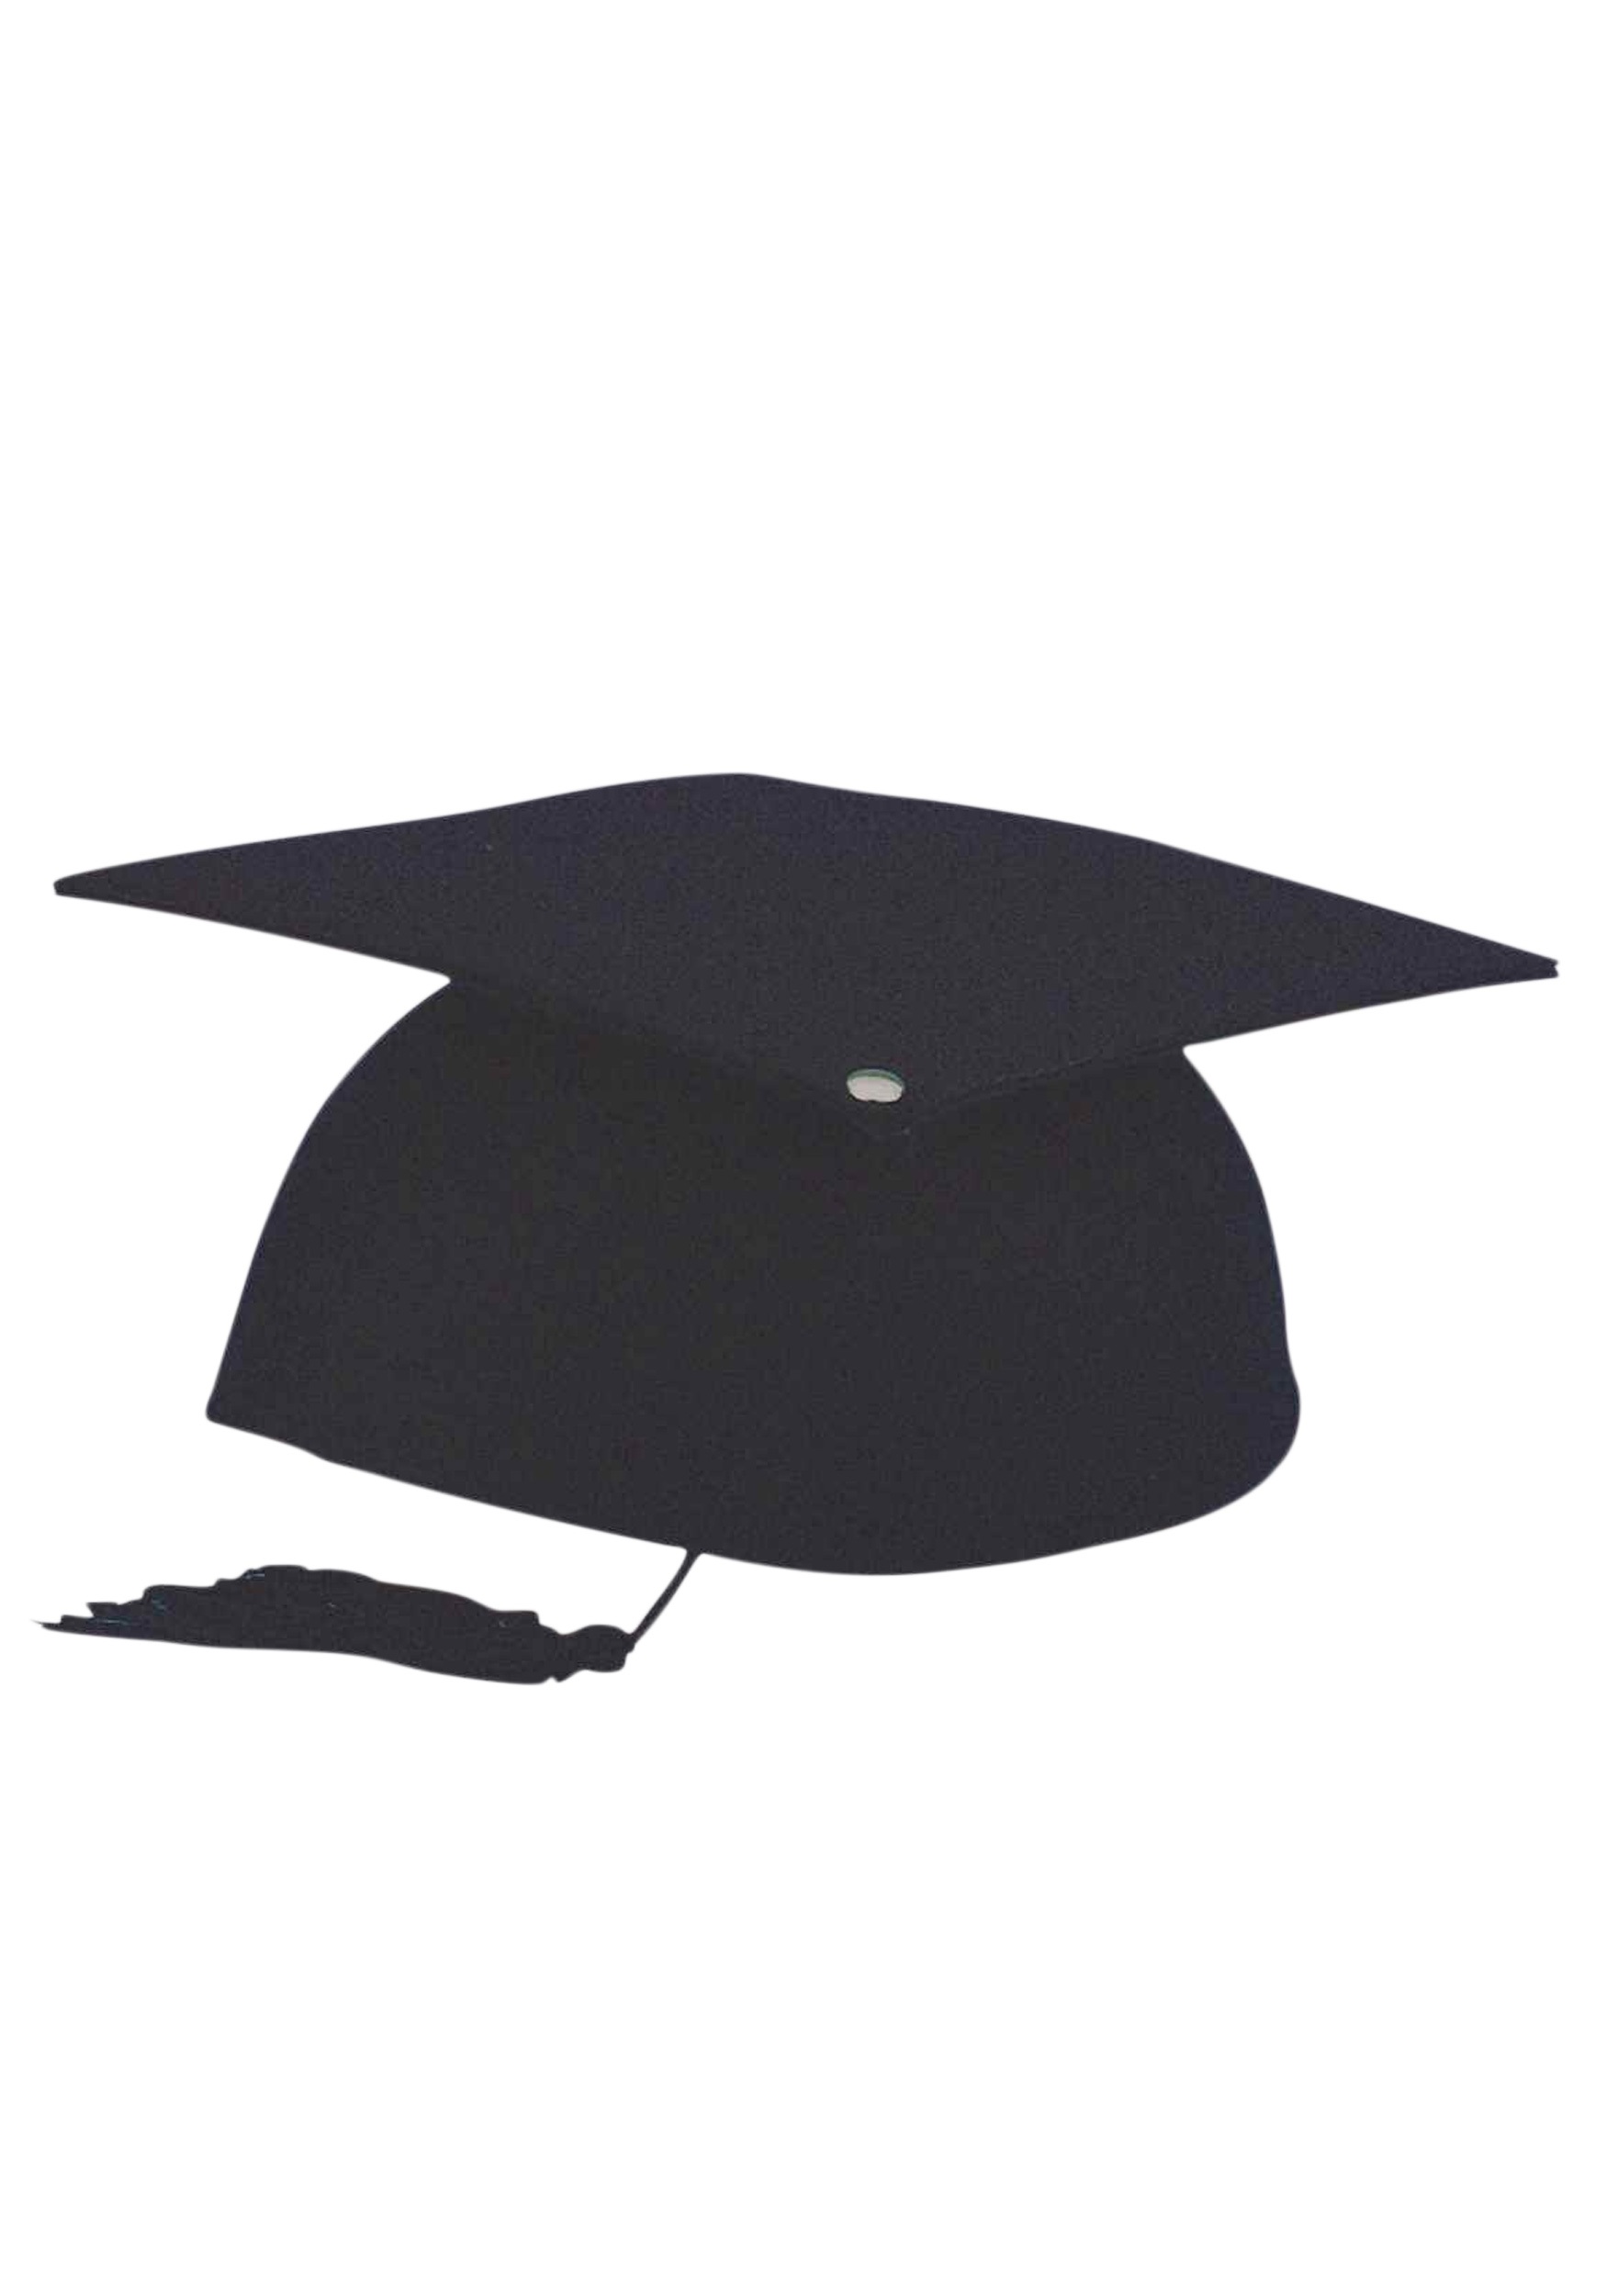 graduation cap black and white clip art